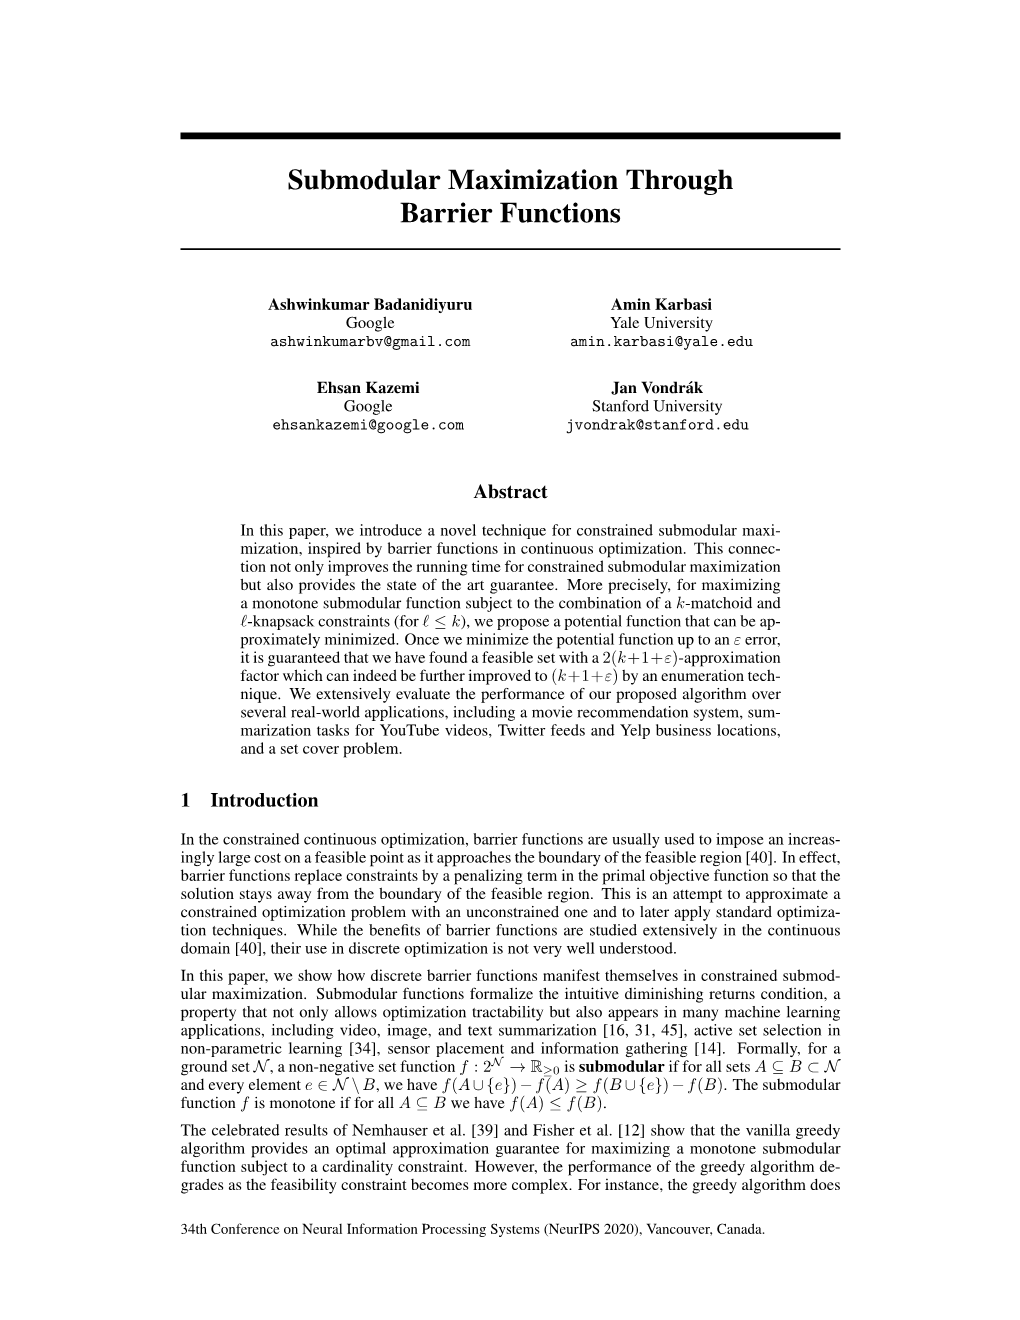 Submodular Maximization Through Barrier Functions